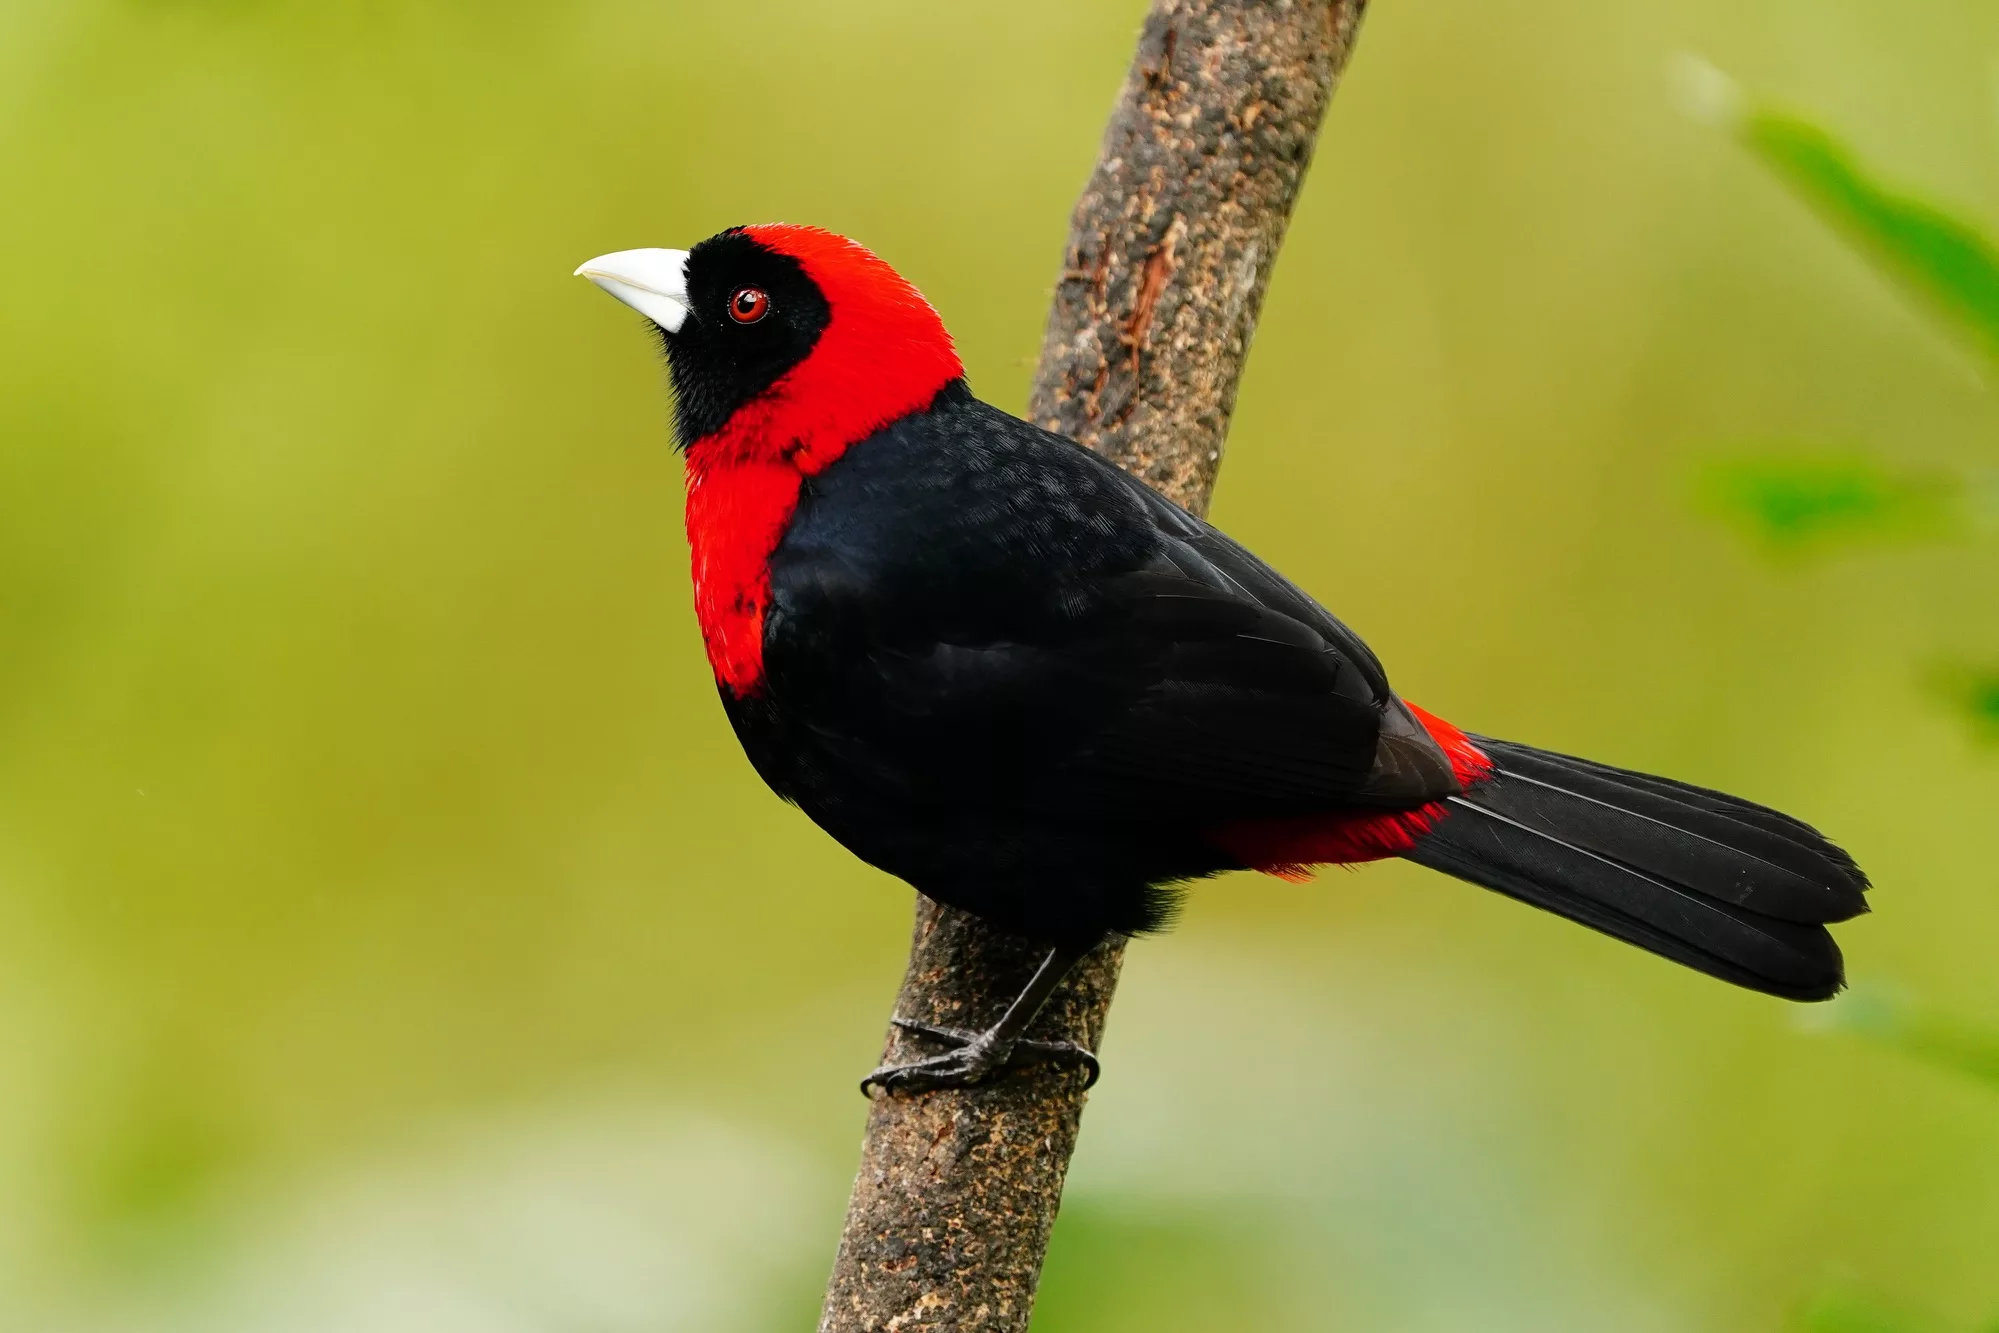 Costa Rica photo workshop for birds